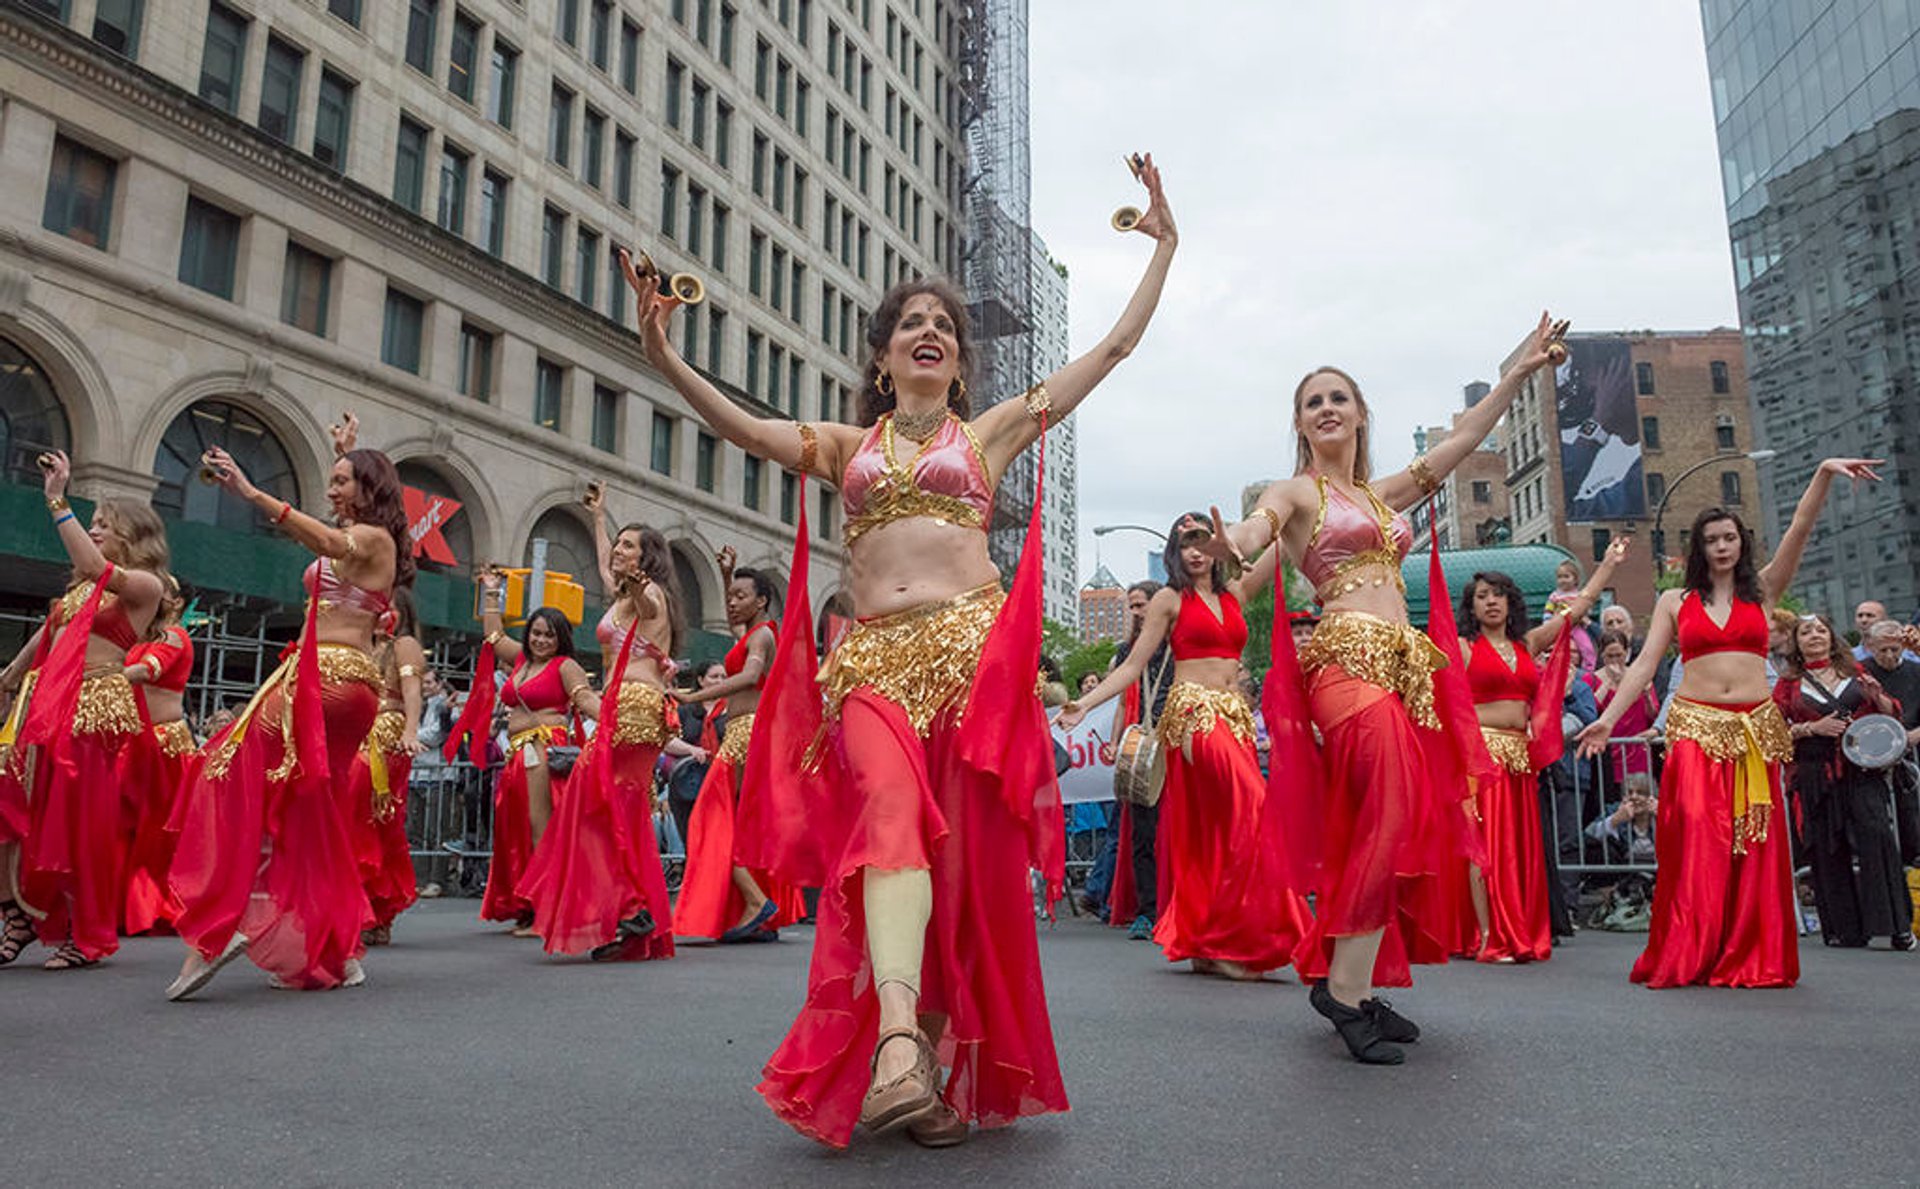 Dance Parade & Festival 2023 in New York Dates